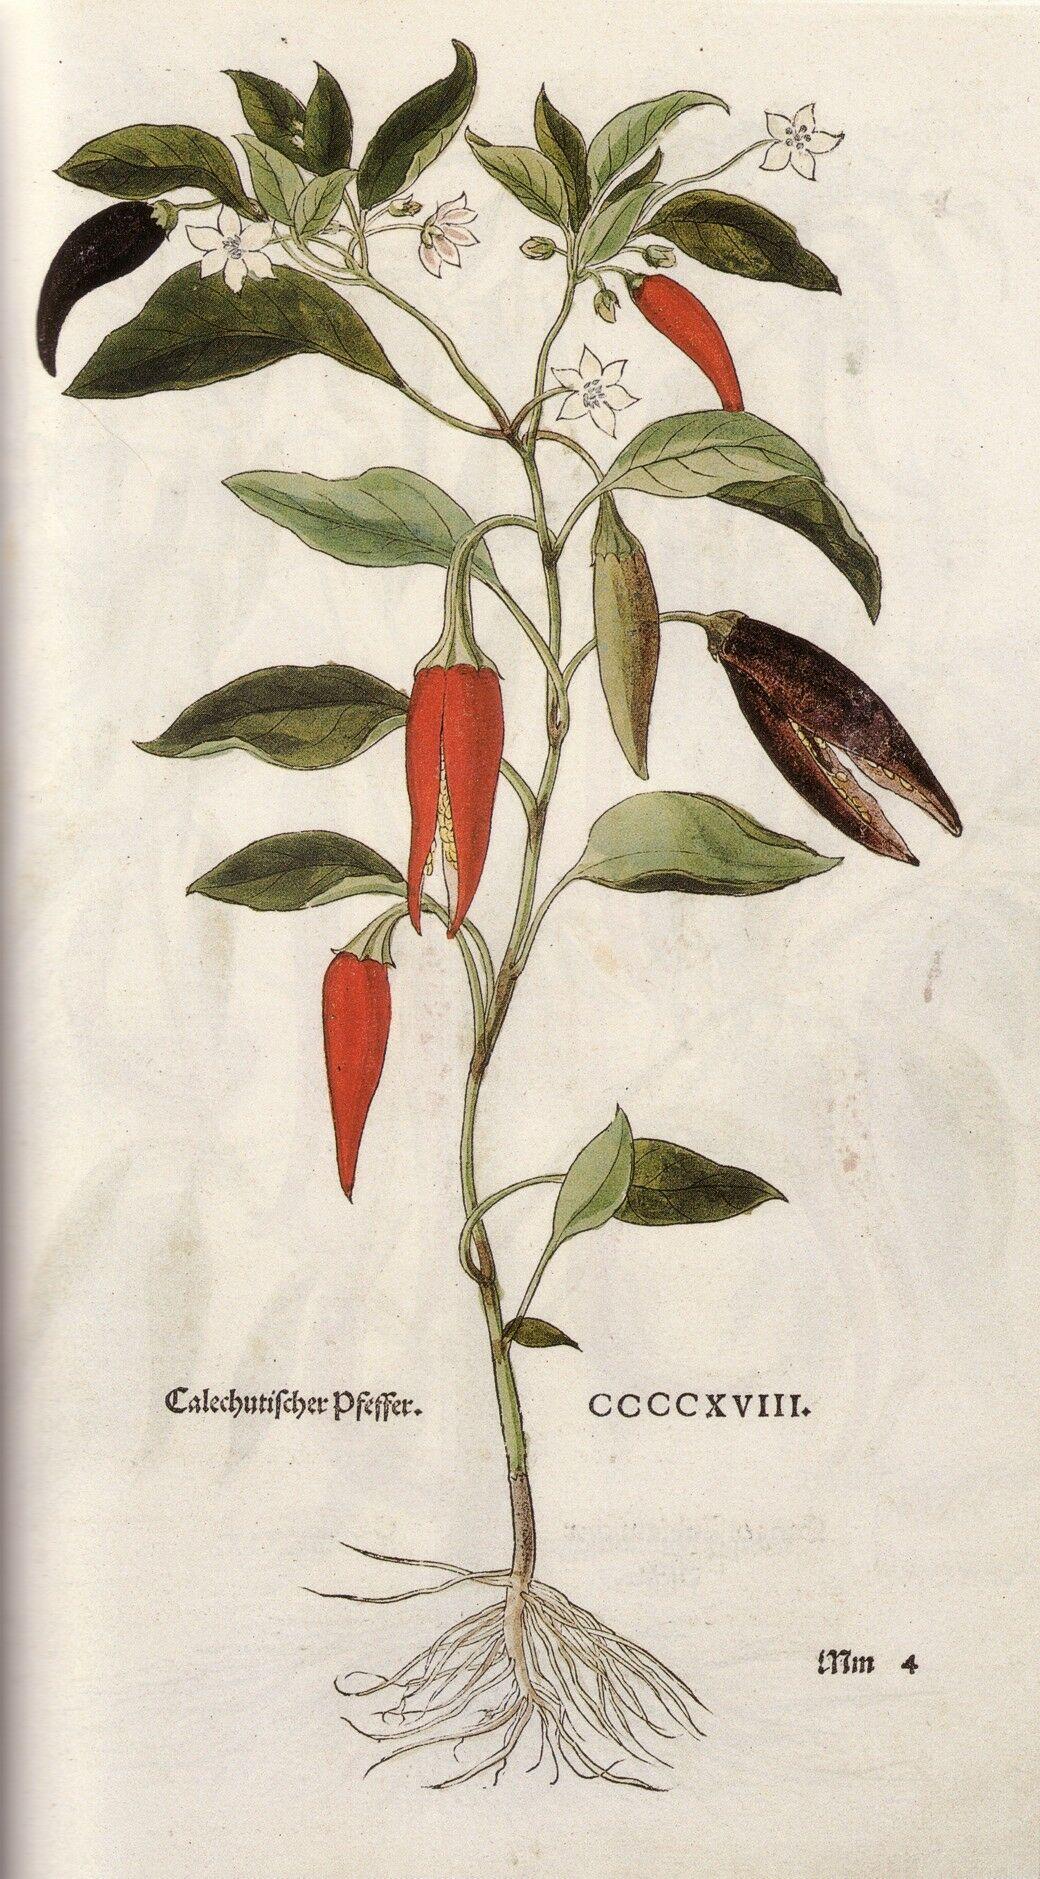 Cayenne pepper illustration by Leonhart Fuchs. (Public Domain)